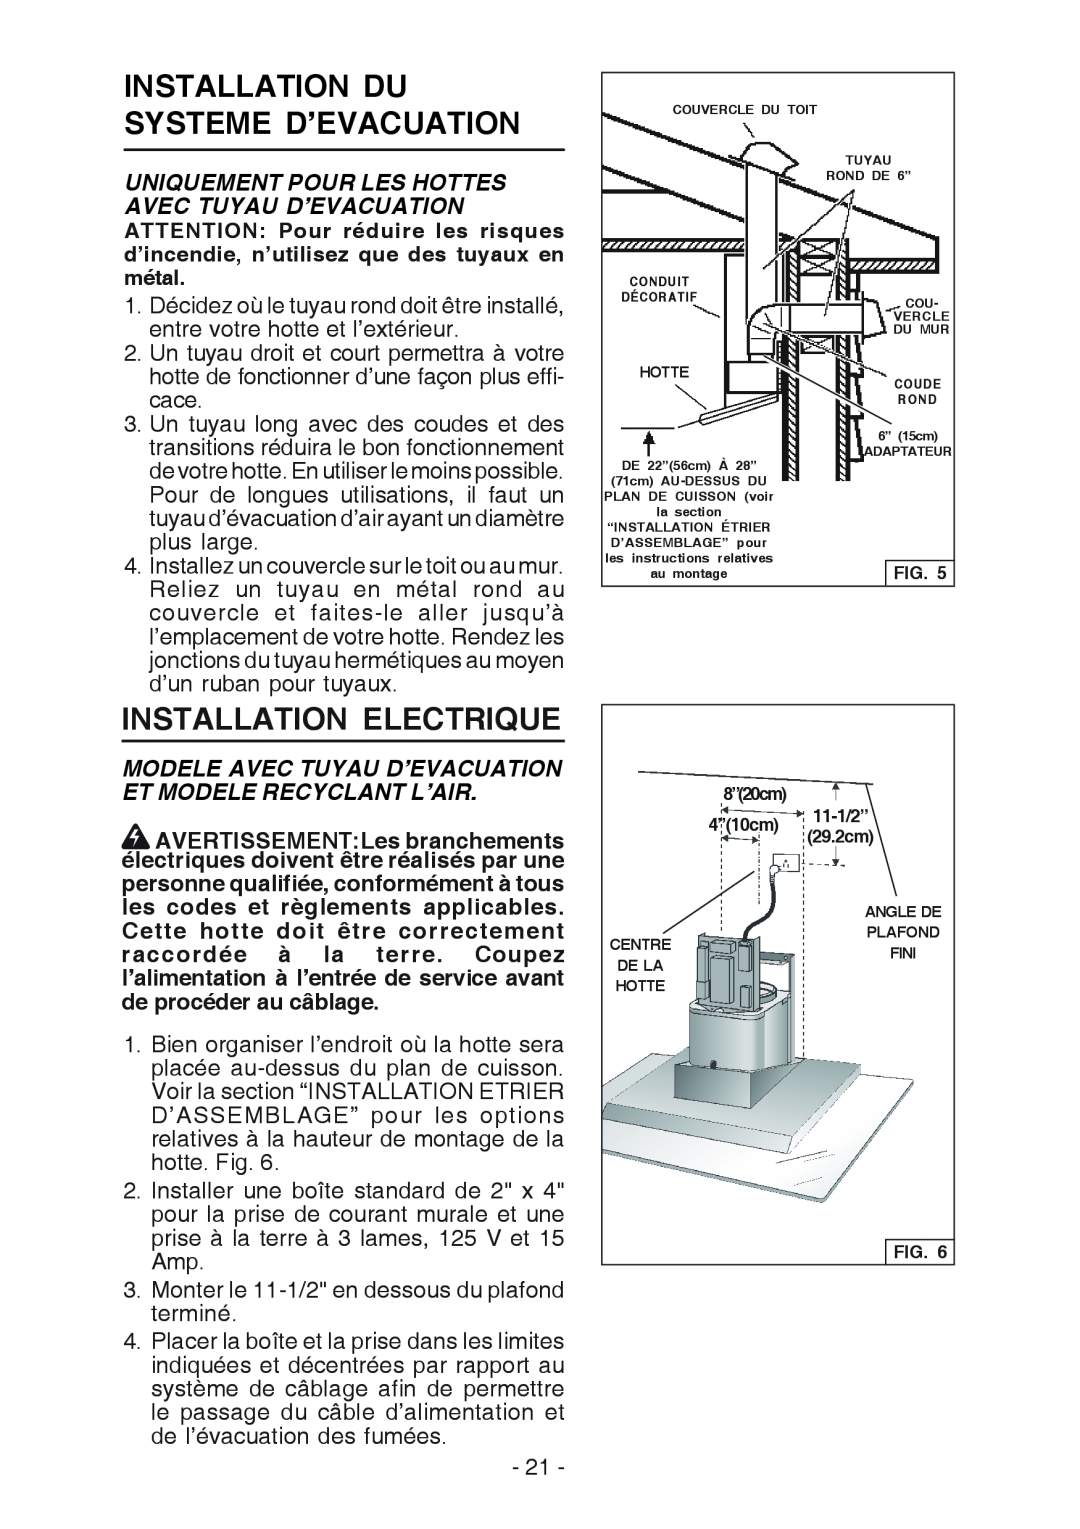 Broan WC26I manual Installation Du Systeme D’Evacuation, Installation Electrique 